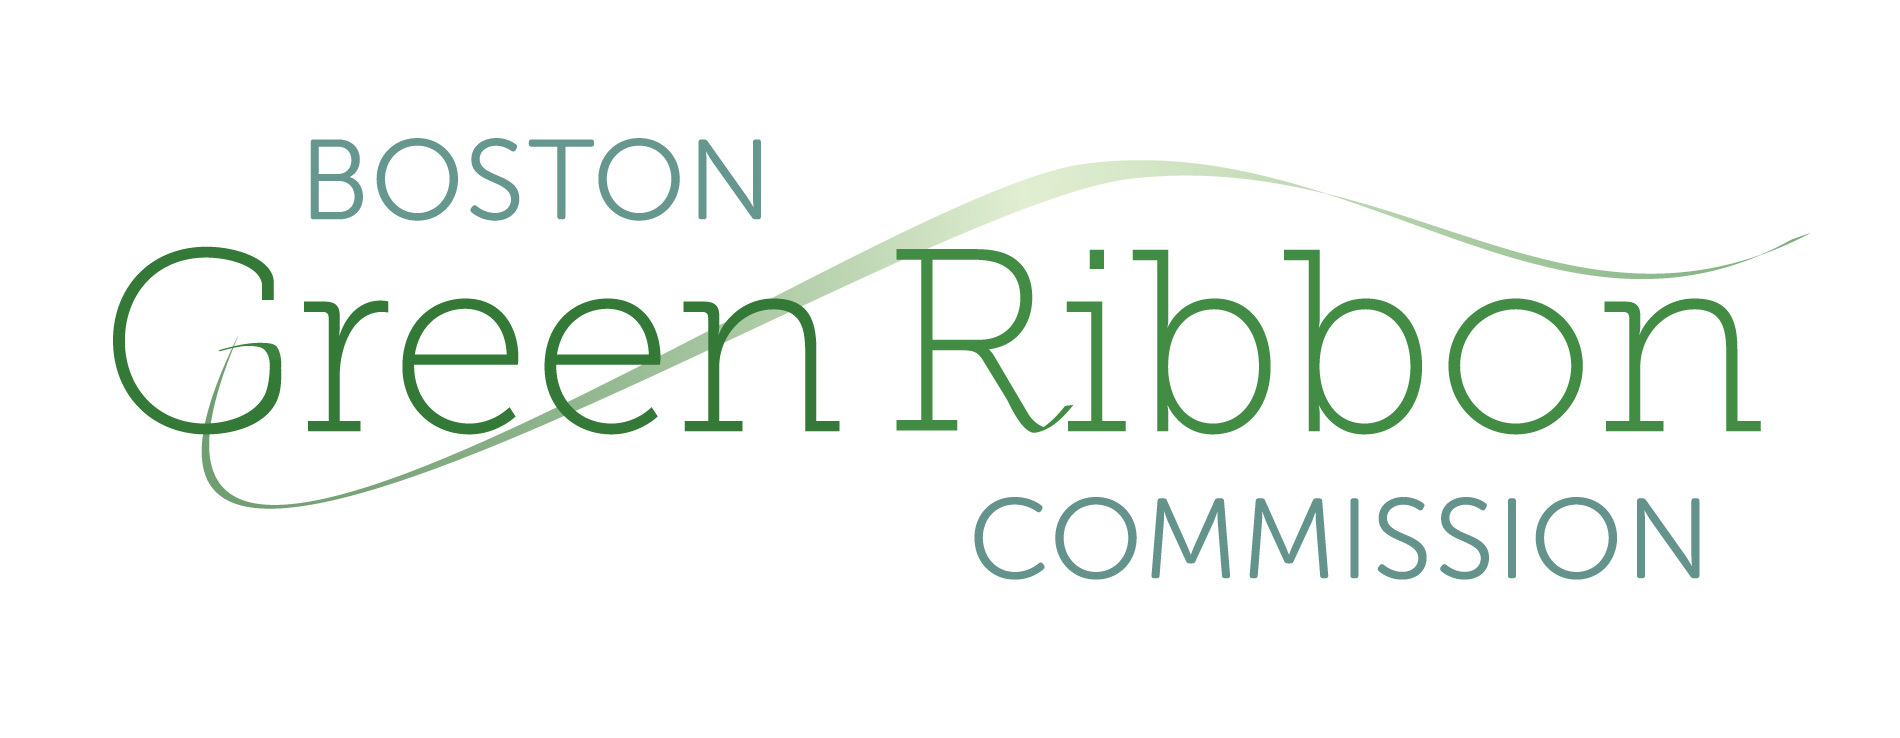 Boston Green Ribbon Commission